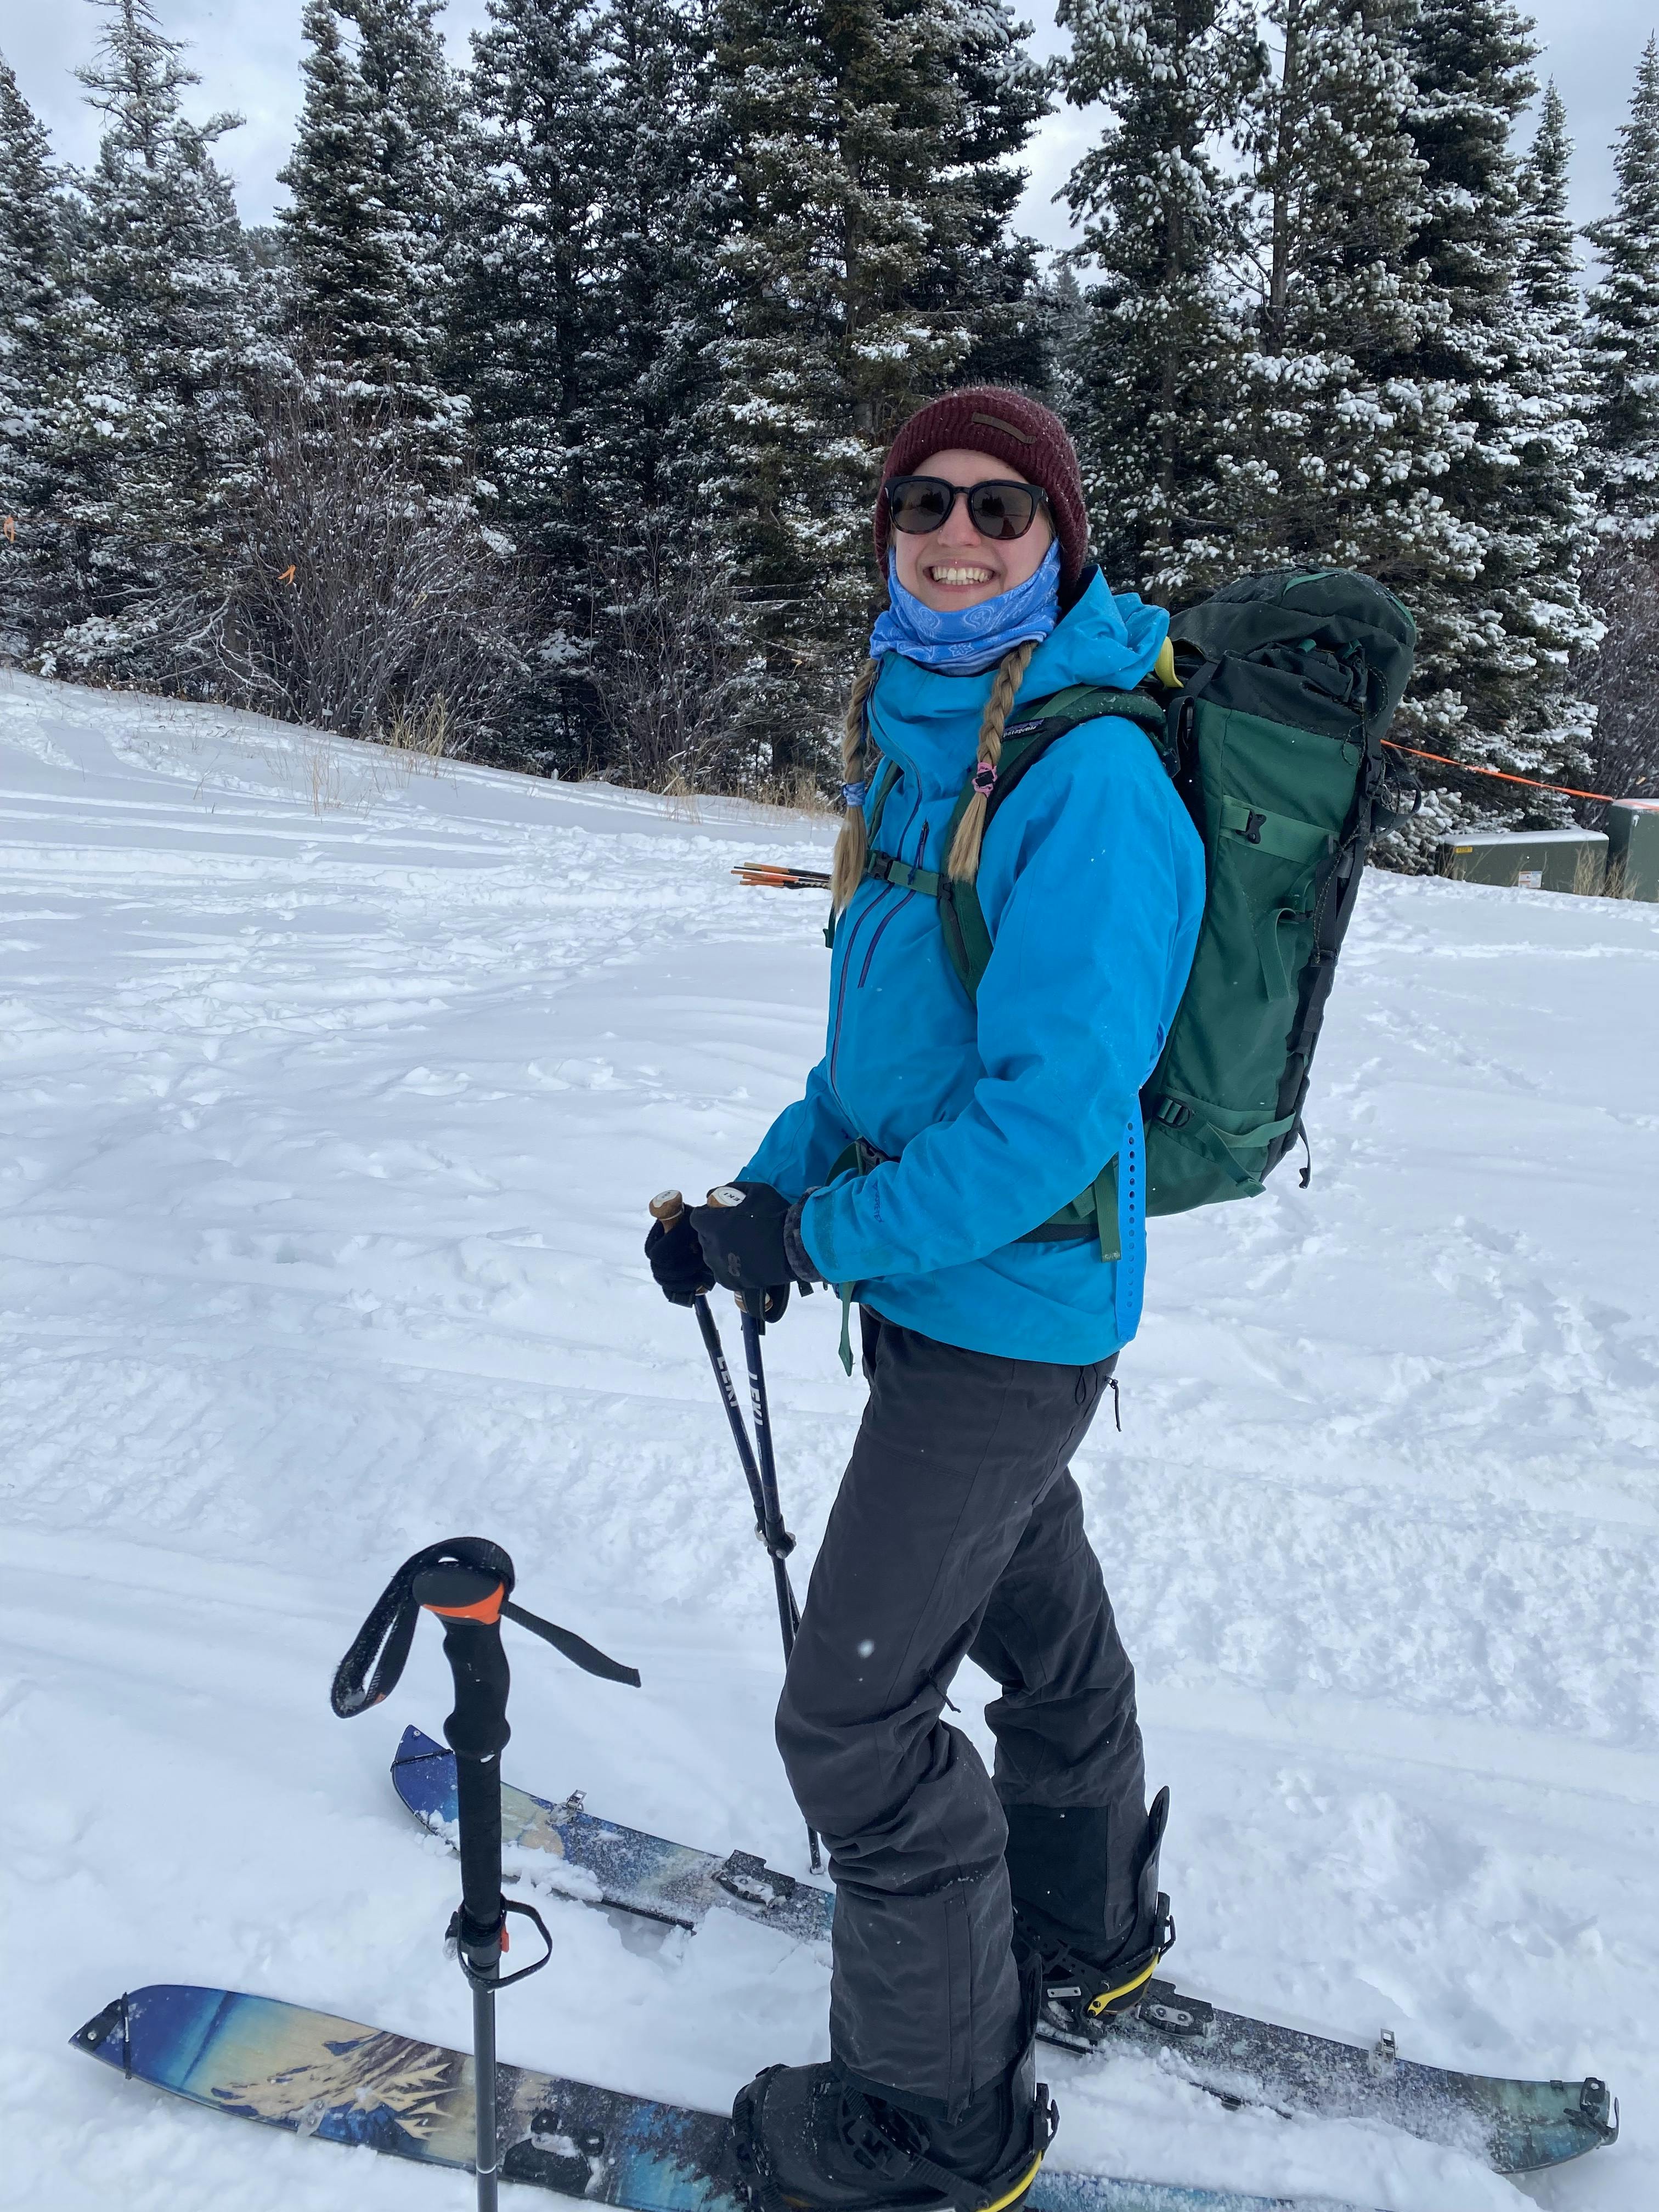 A woman splitboarding on a snowy trail. Her splitboard is in uphill mode and she is wearing a backpack.